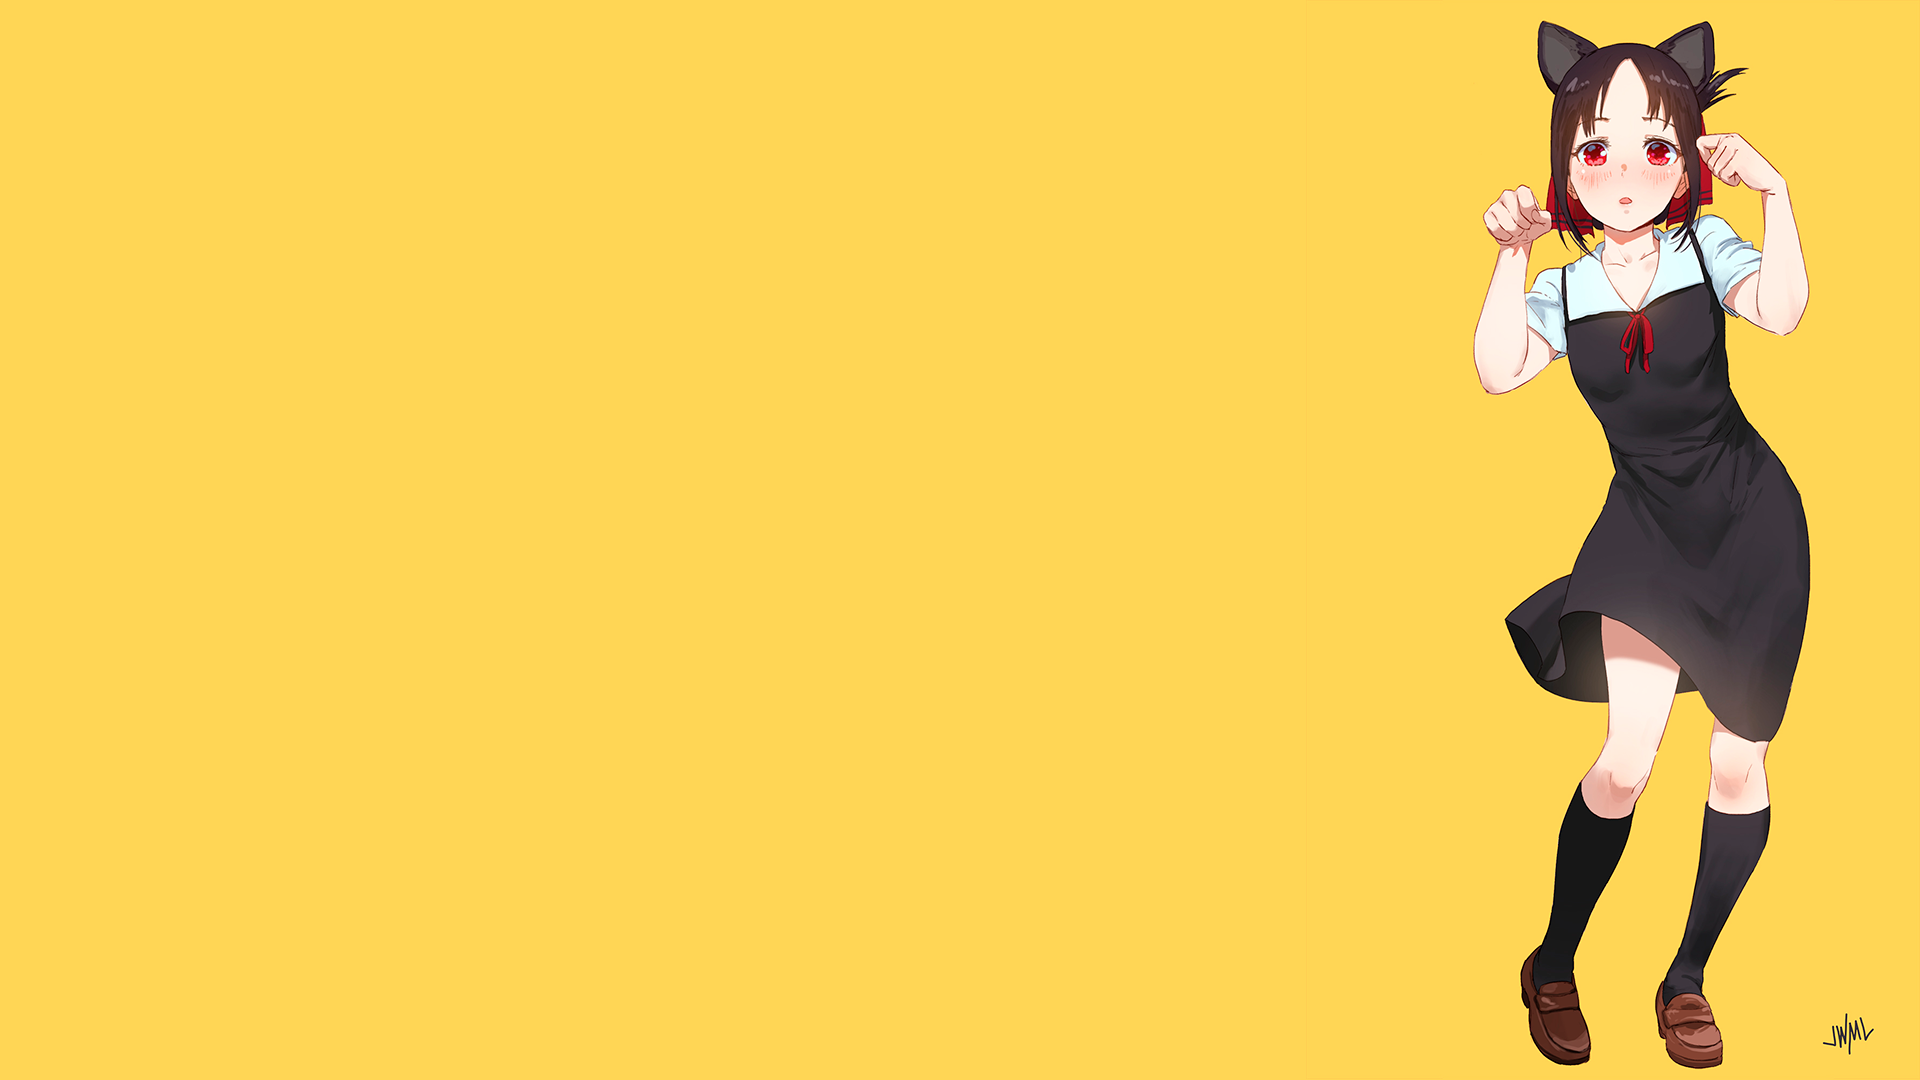 Anime 1920x1080 Kaguya Shinomiya Kaguya-Sama: Love is War anime anime girls cat ears simple background yellow background